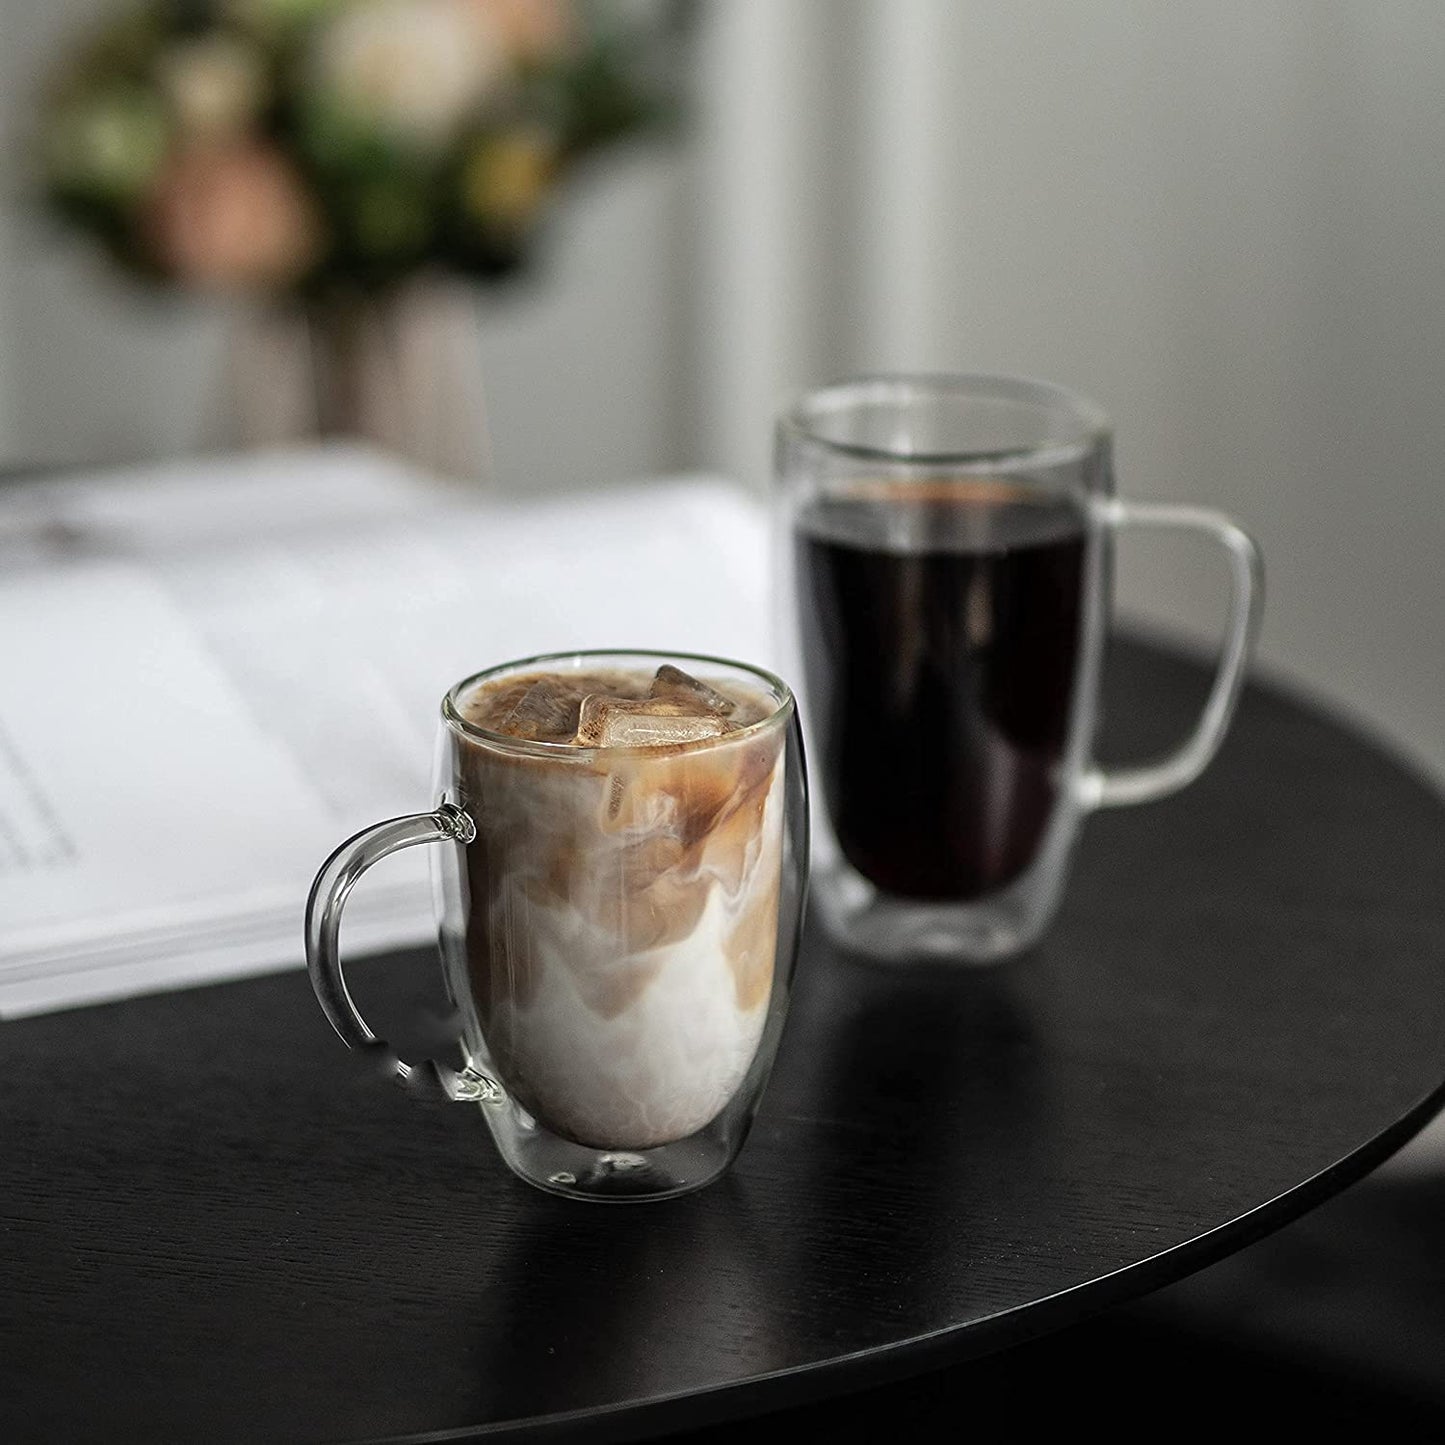 Double Wall Glass Coffee Mug, 15.2 Ounces-Clear Glass Coffee Cup with Handle